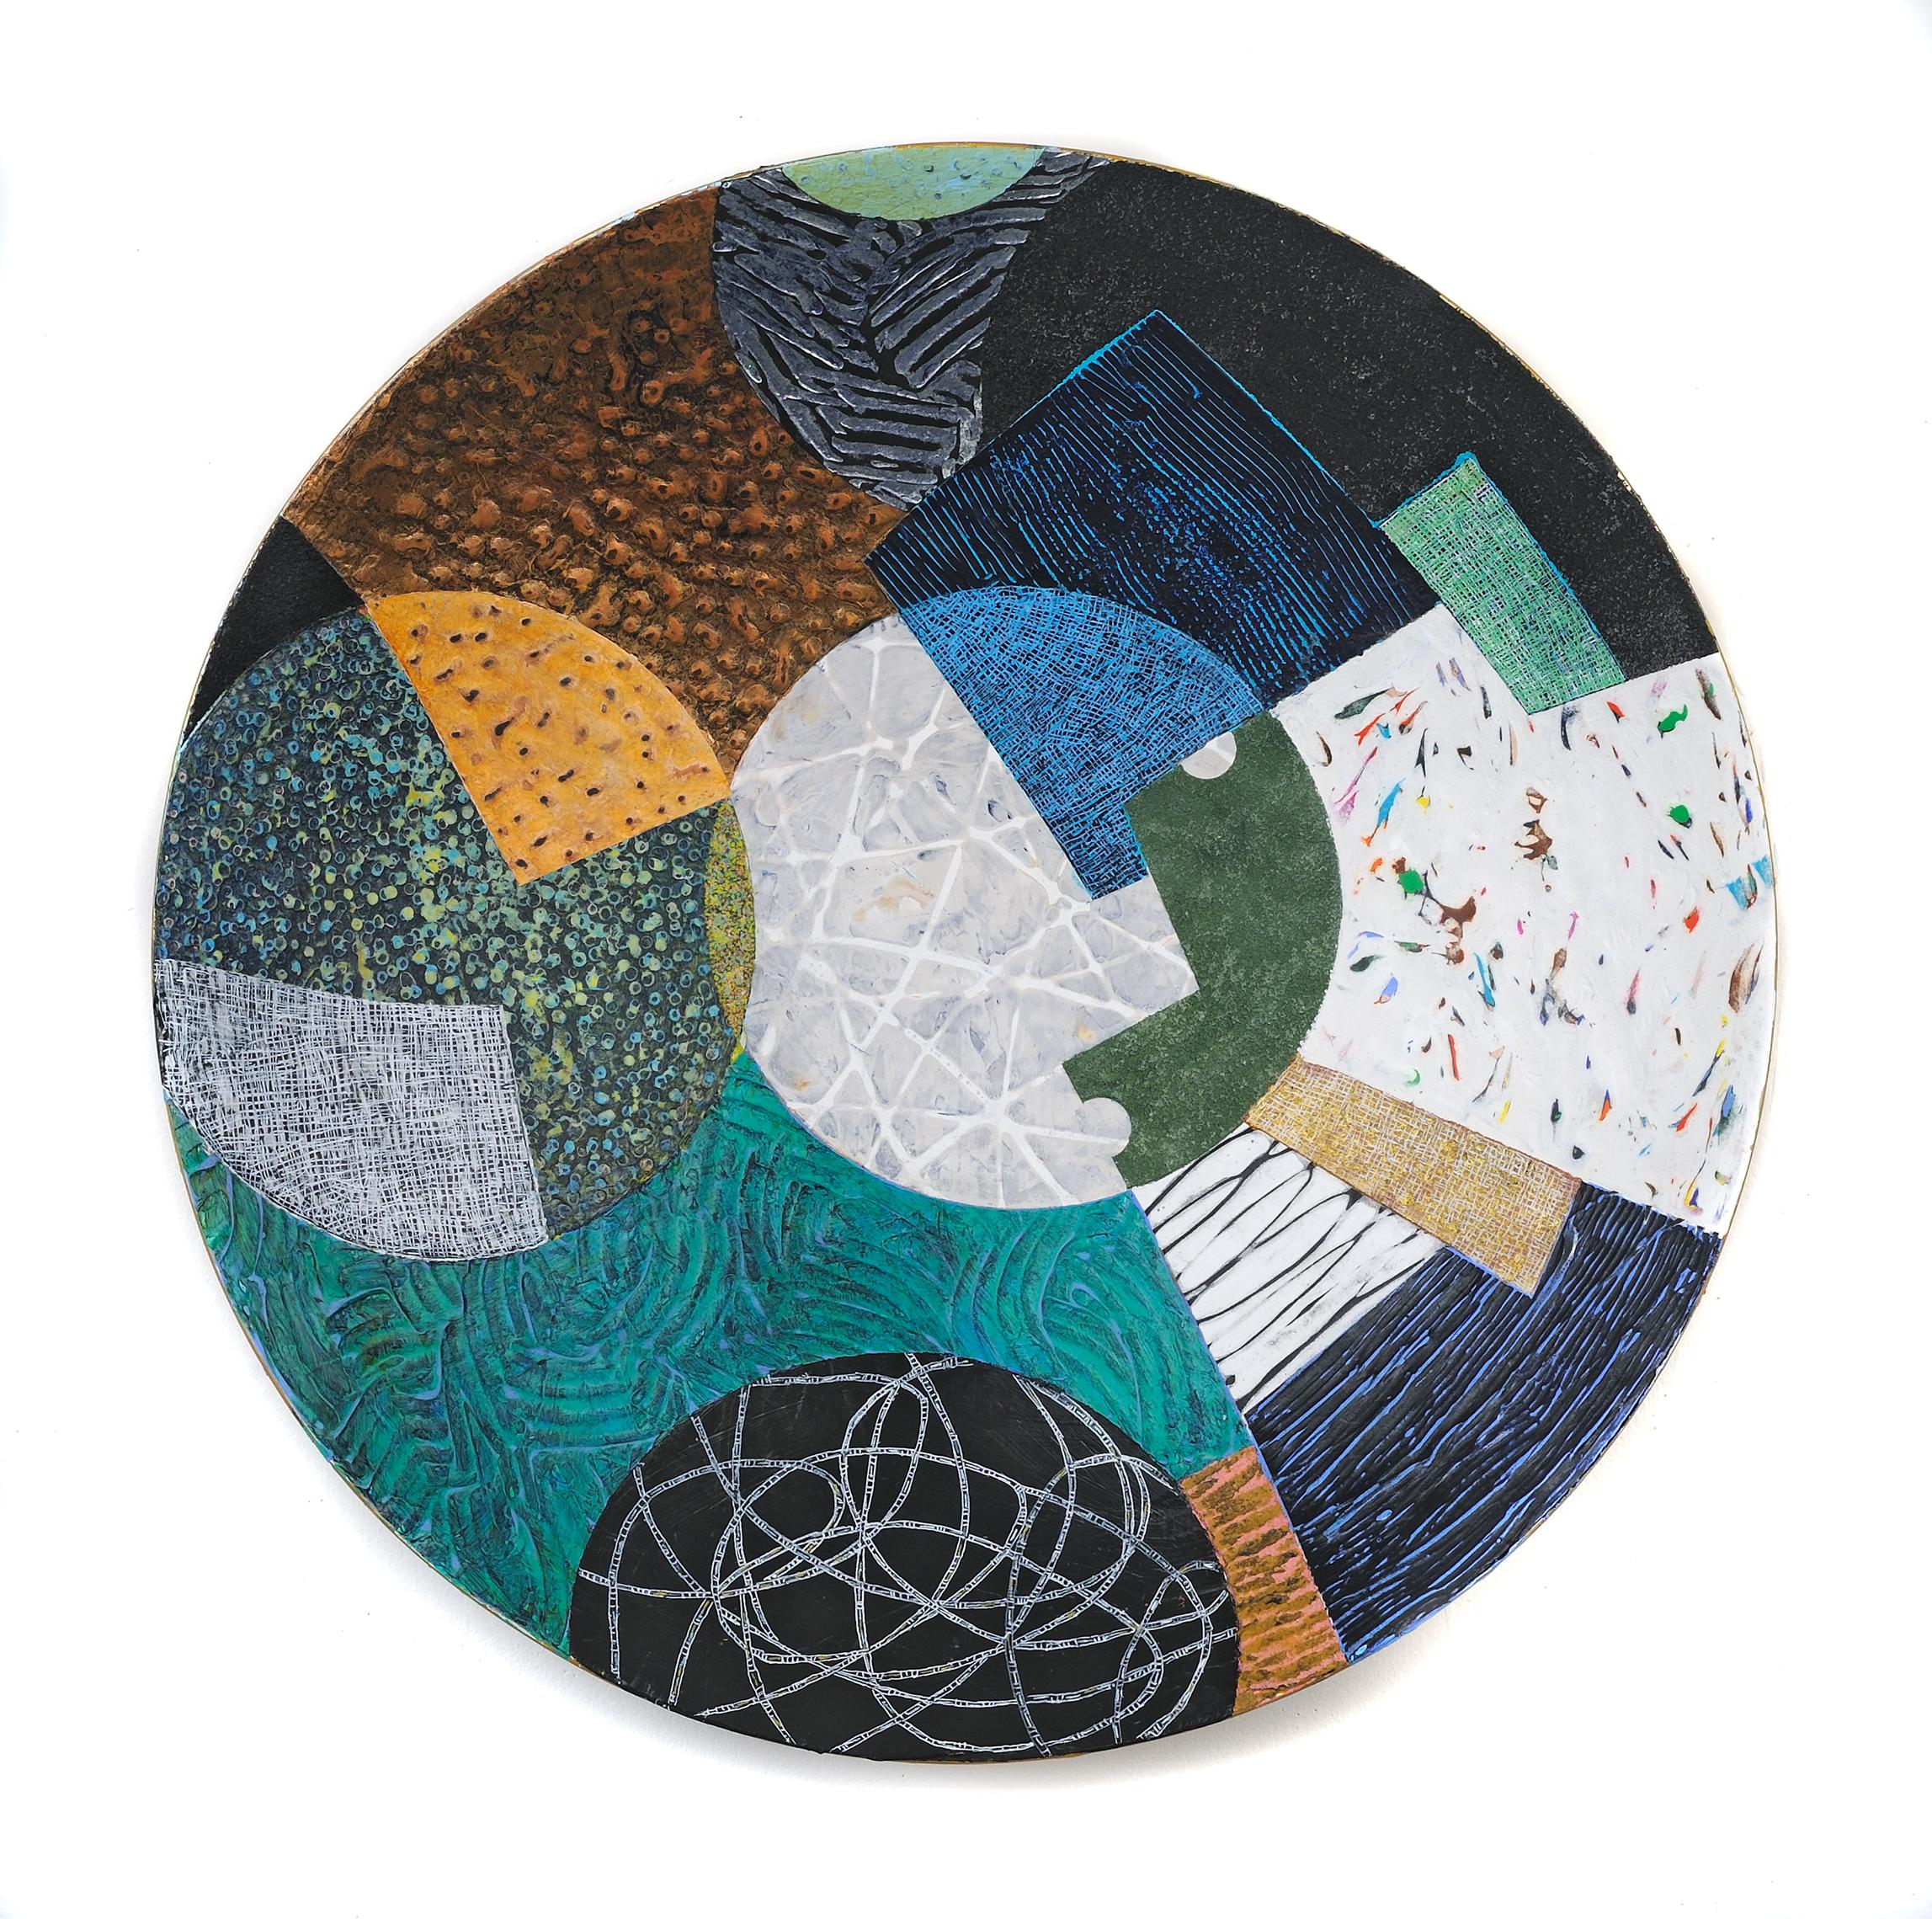 Francie Hester Abstract Sculpture - Vessel #6, multicolored mixed media sculptural piece, textured, 22" diameter